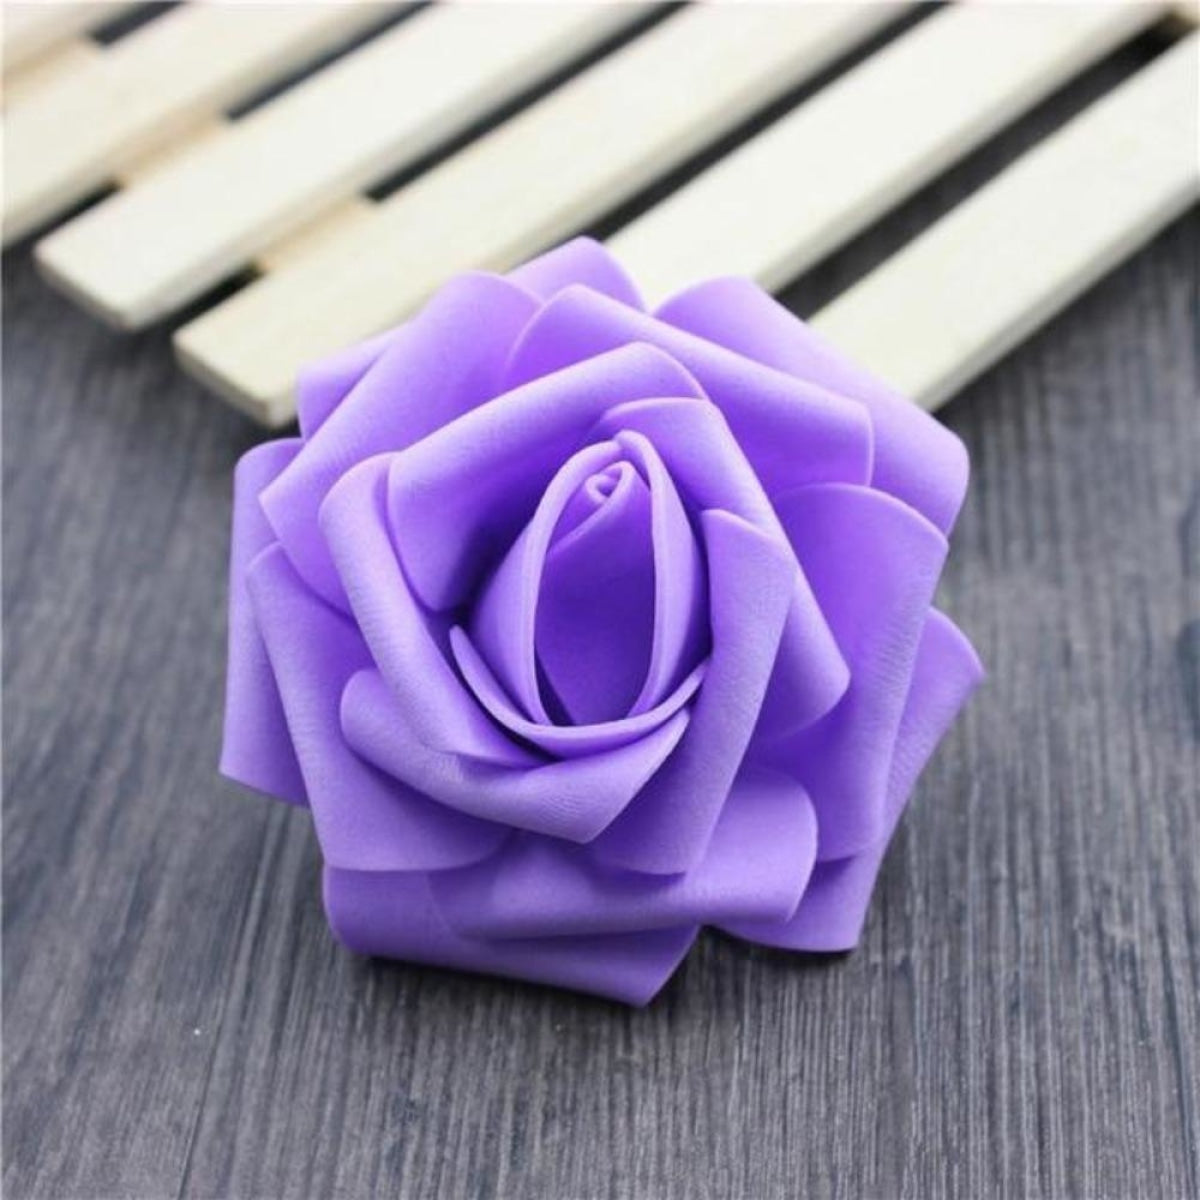 7.5Cm Artificial Fake Flowers Foam Rose Head For Wedding Decorations Diy Wreaths 40Pcs Purple